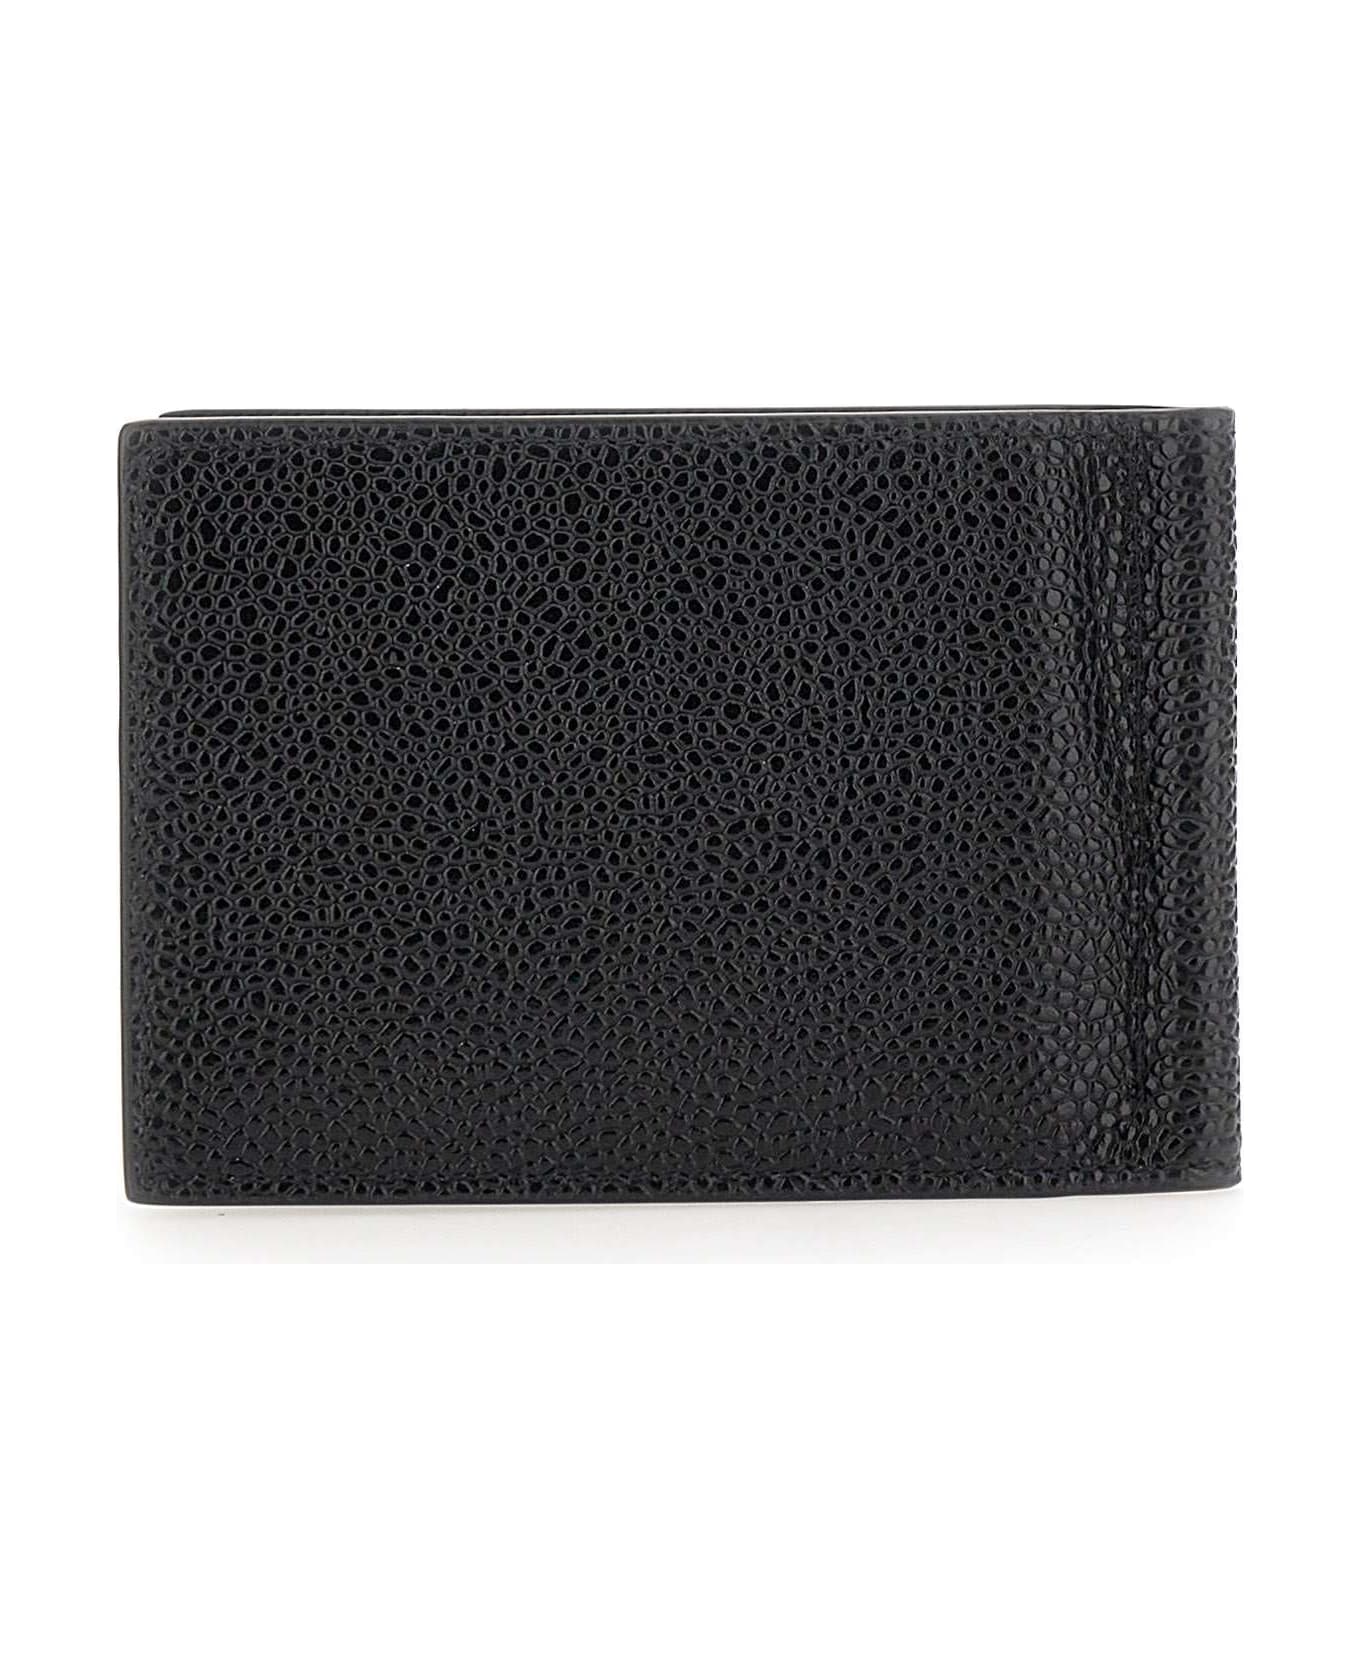 Thom Browne "money Clip" Leather Wallet - BLACK